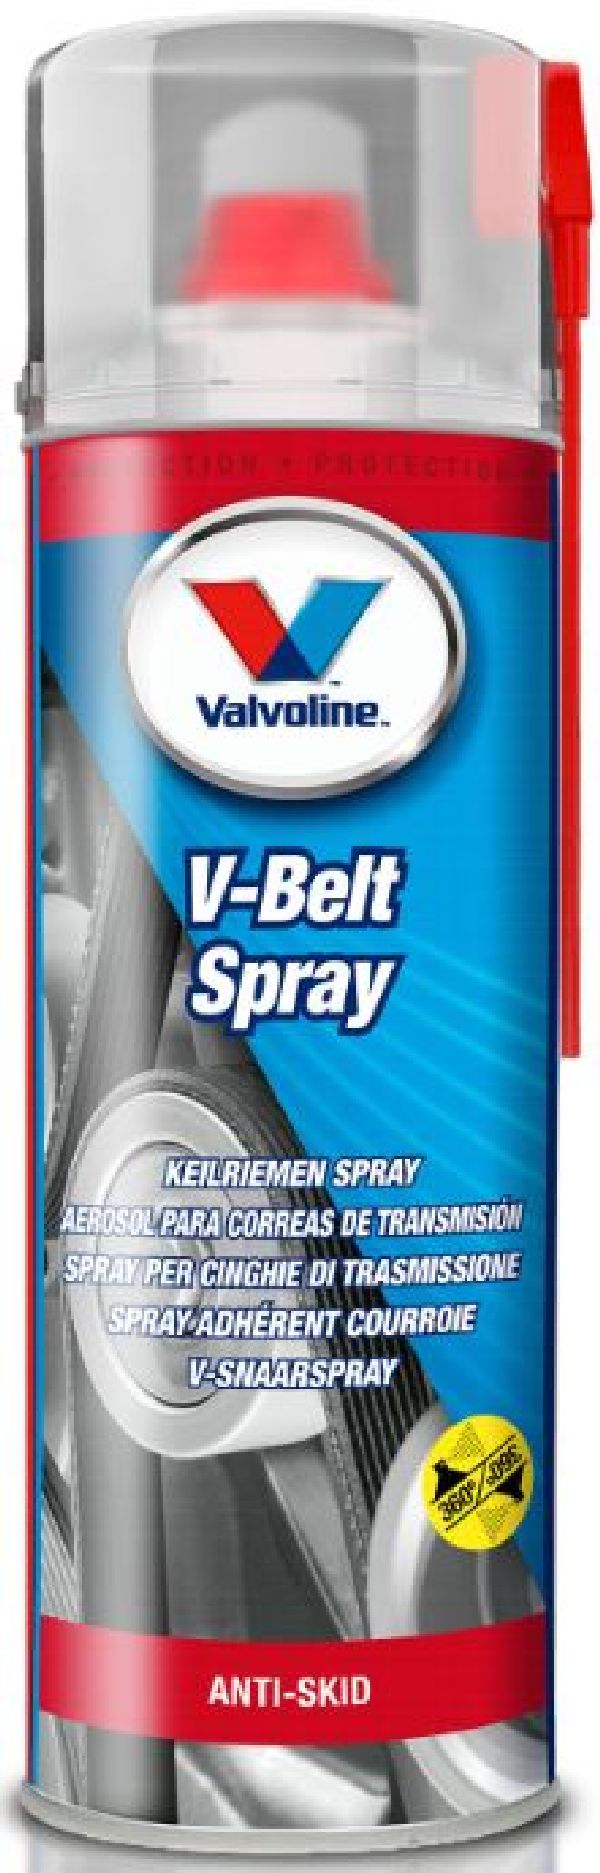 Valvoline V-Belt Spray